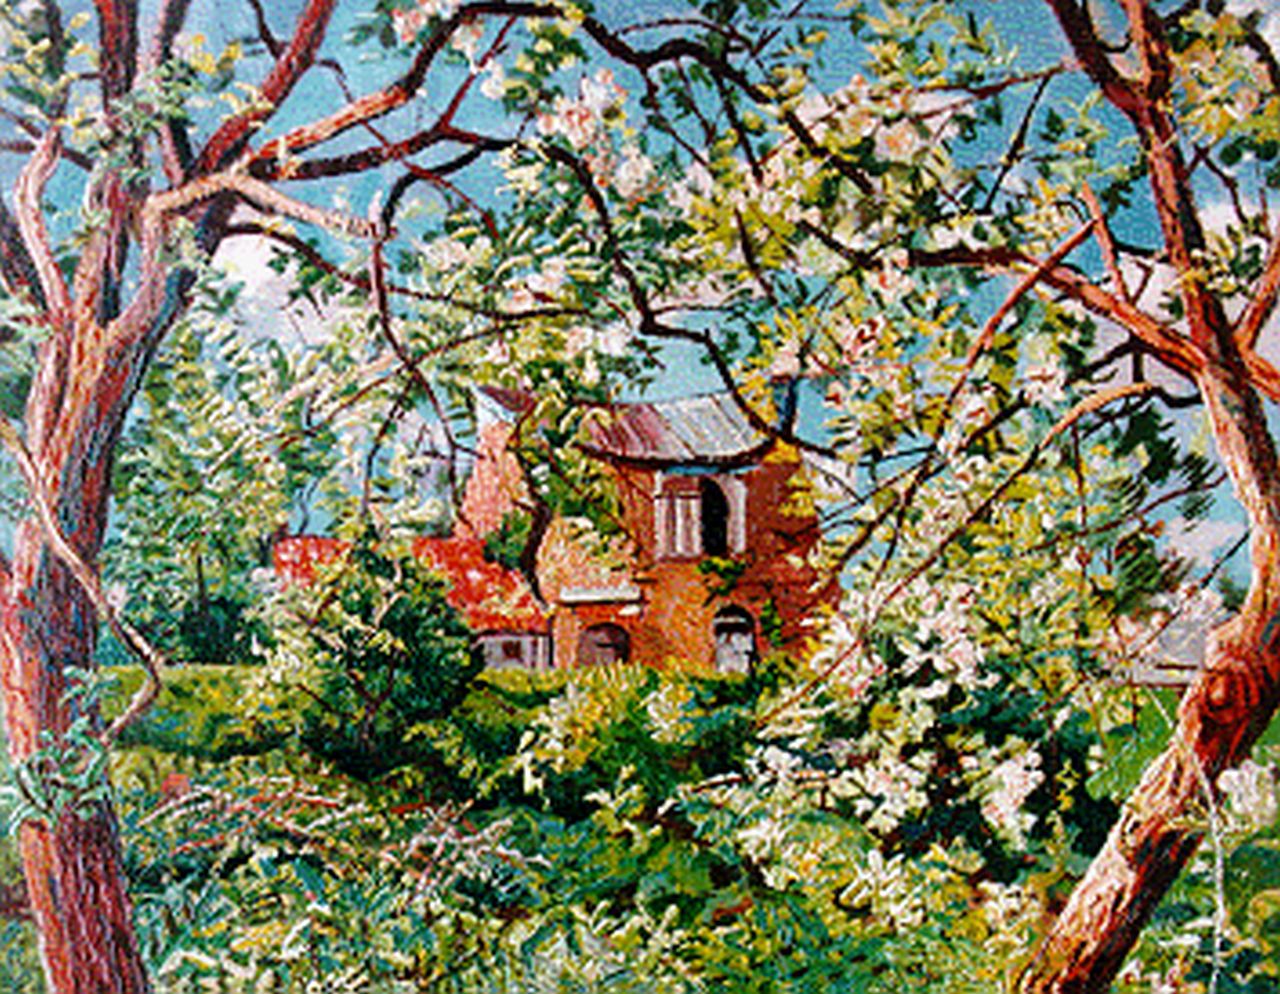 Bieling H.F.  | Hermann Friederich 'Herman' Bieling, An orchard in blossom, Öl auf Leinwand 46,3 x 60,4 cm, signed l.r. und dated '48